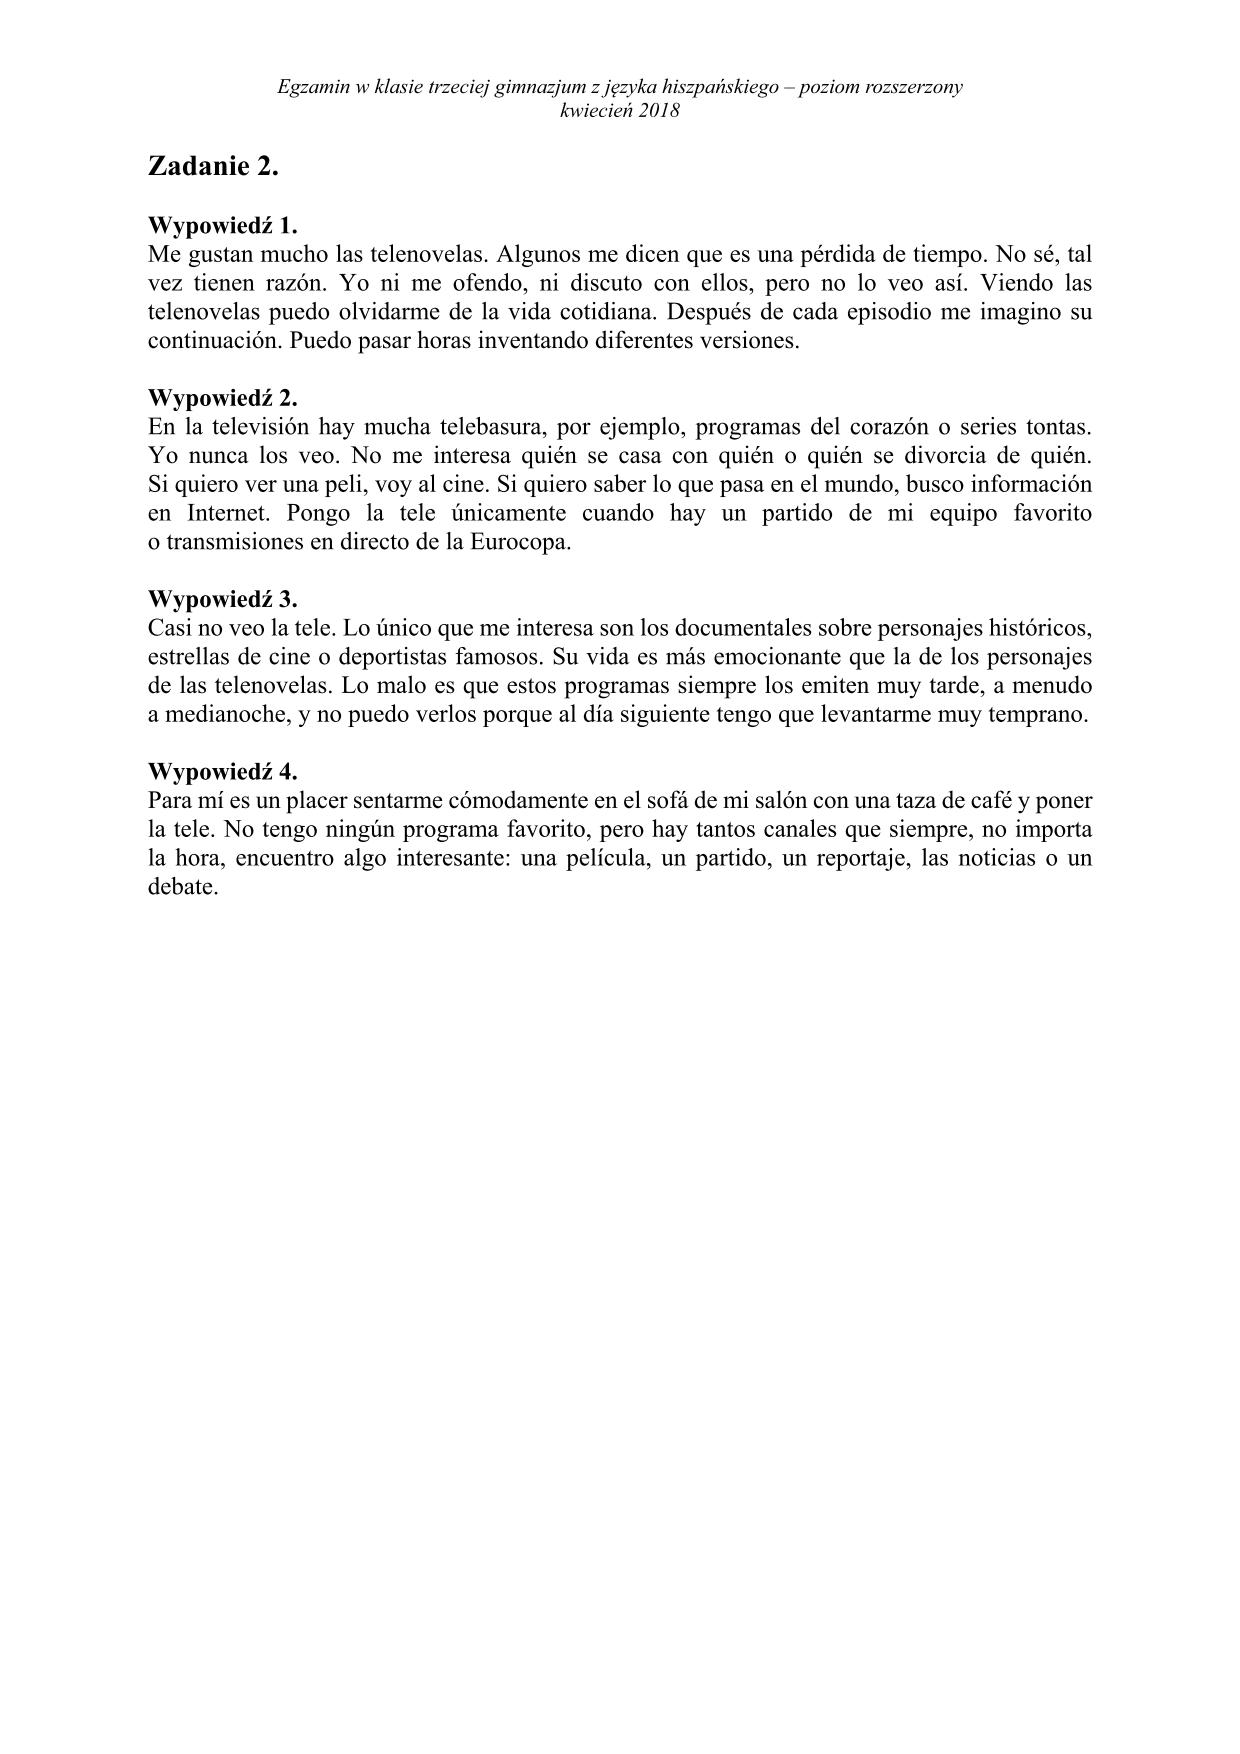 transkrypcja-hiszpanski-poziom-rozszerzony-egzamin-gimnazjalny-2018 - 2